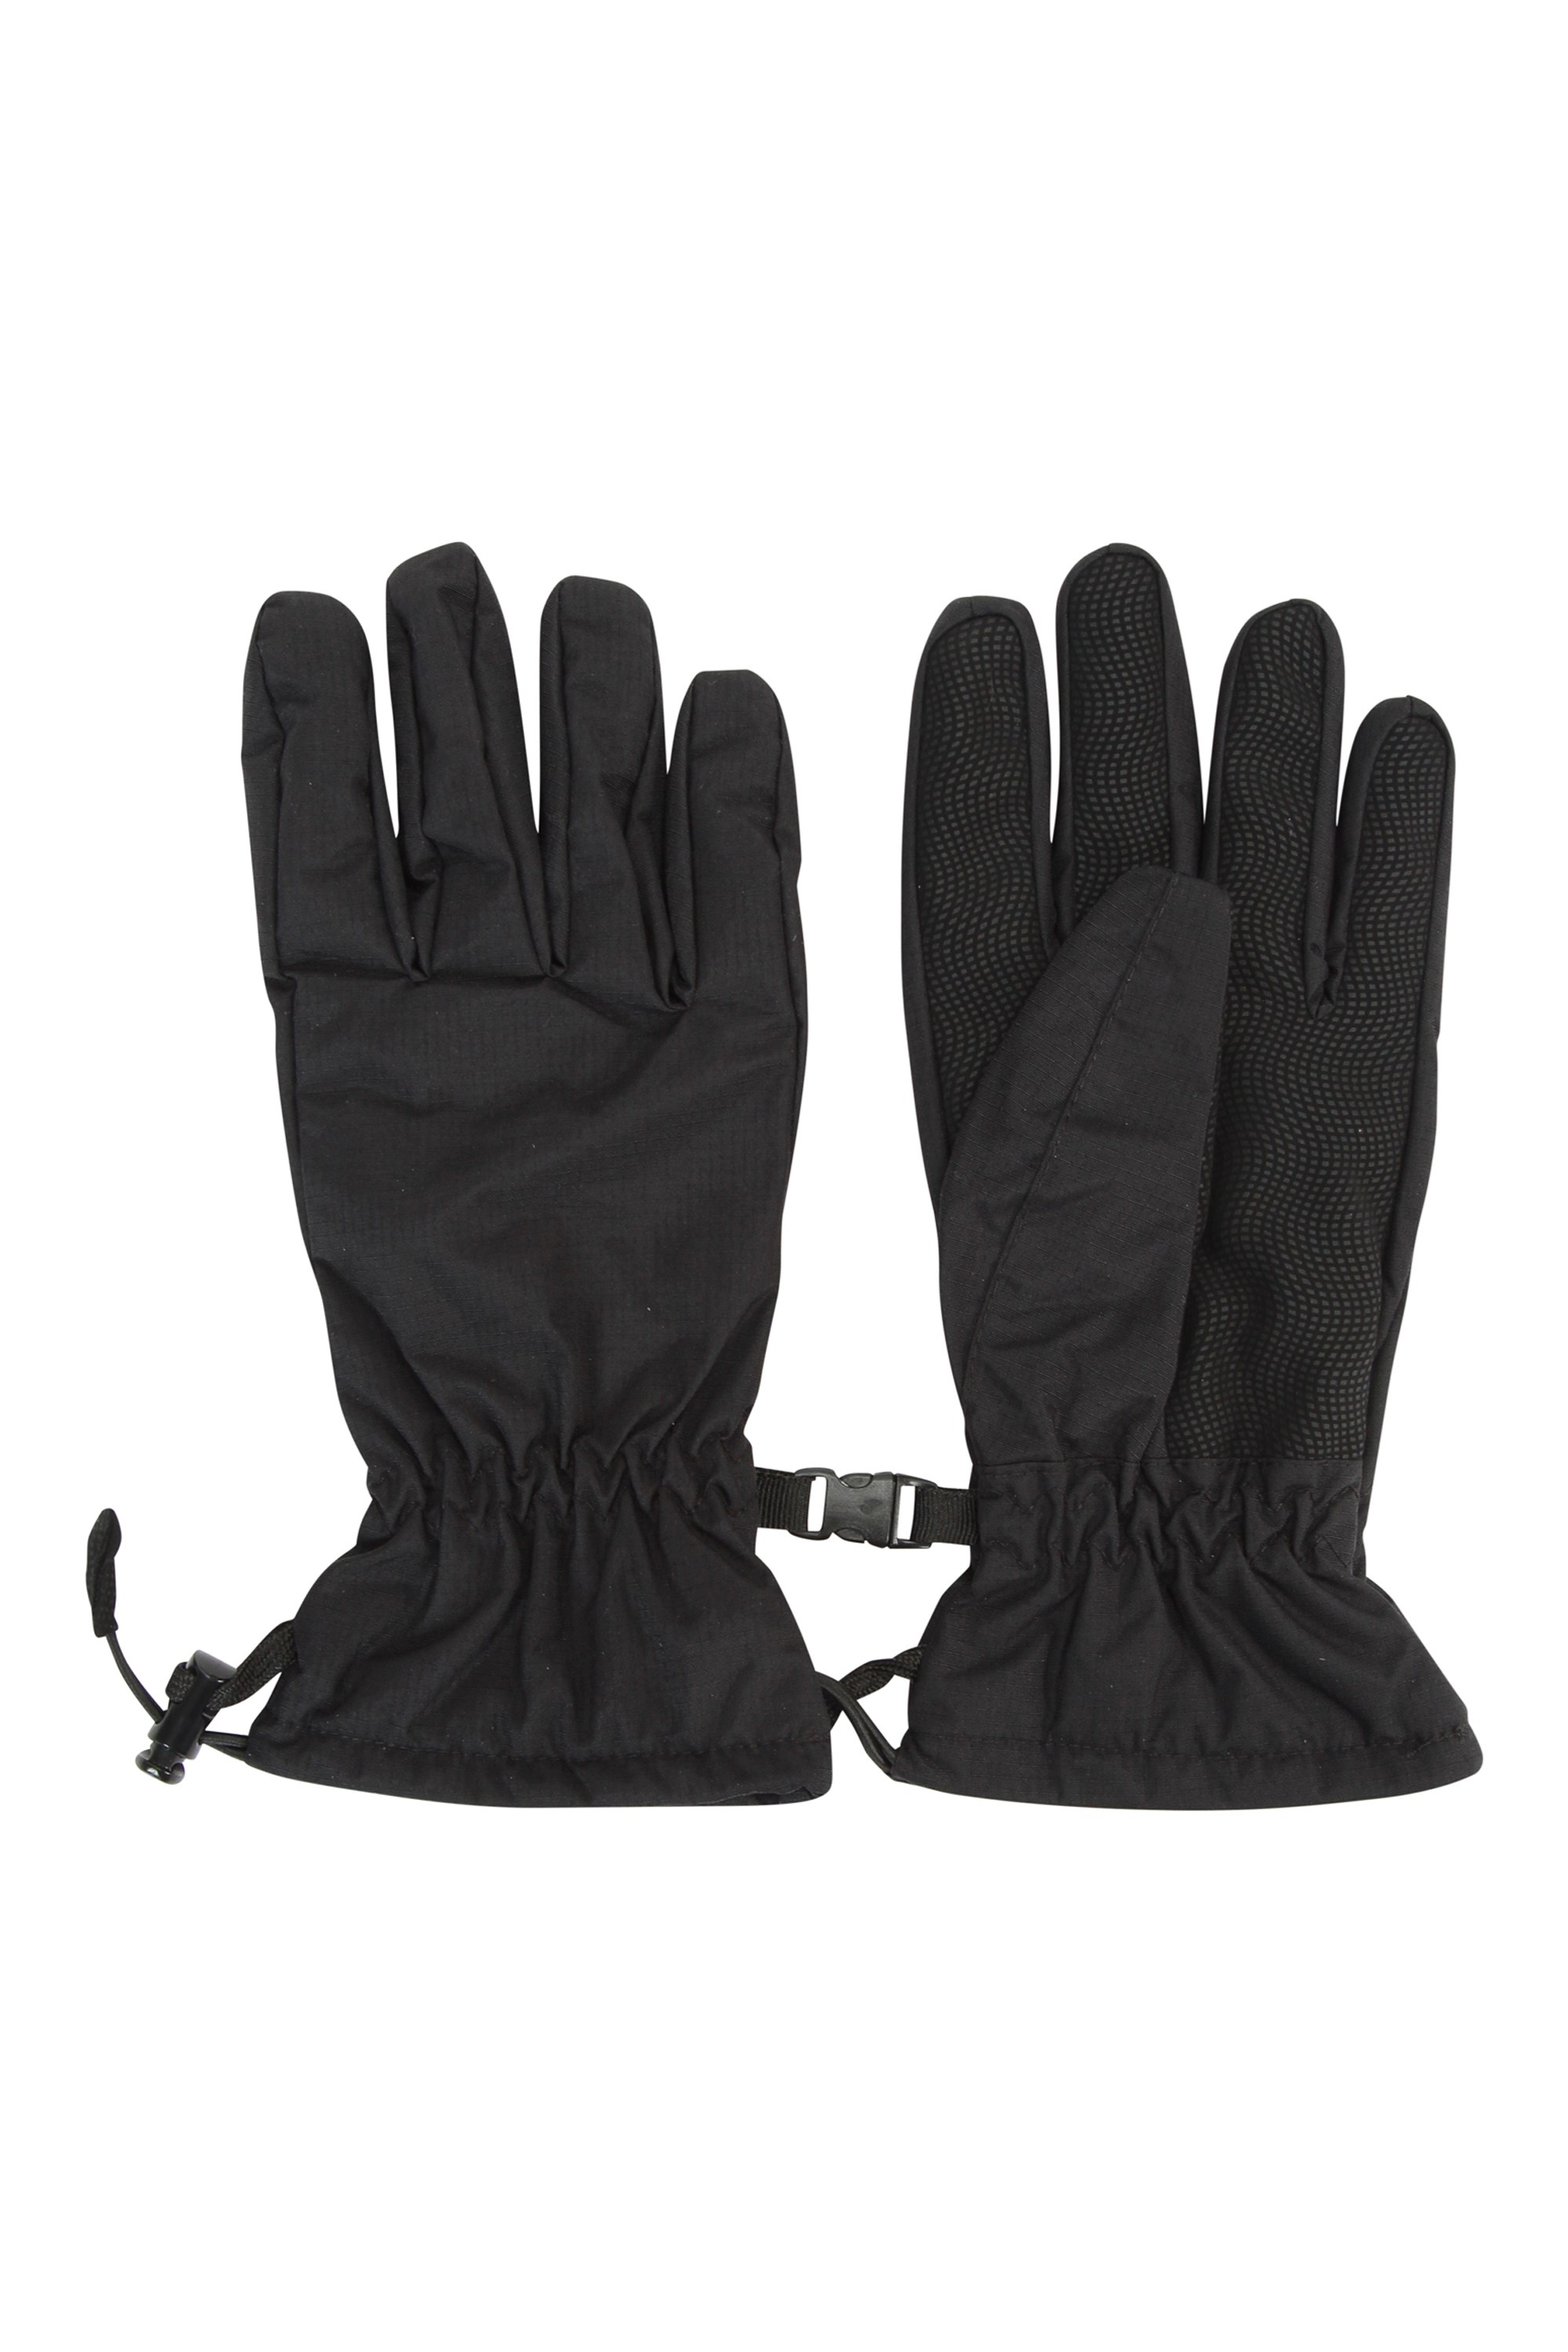 PU Touch Screen Winter Gloves for Boys Girls Waterproof Gloves Women Men Momoon Ski Gloves 